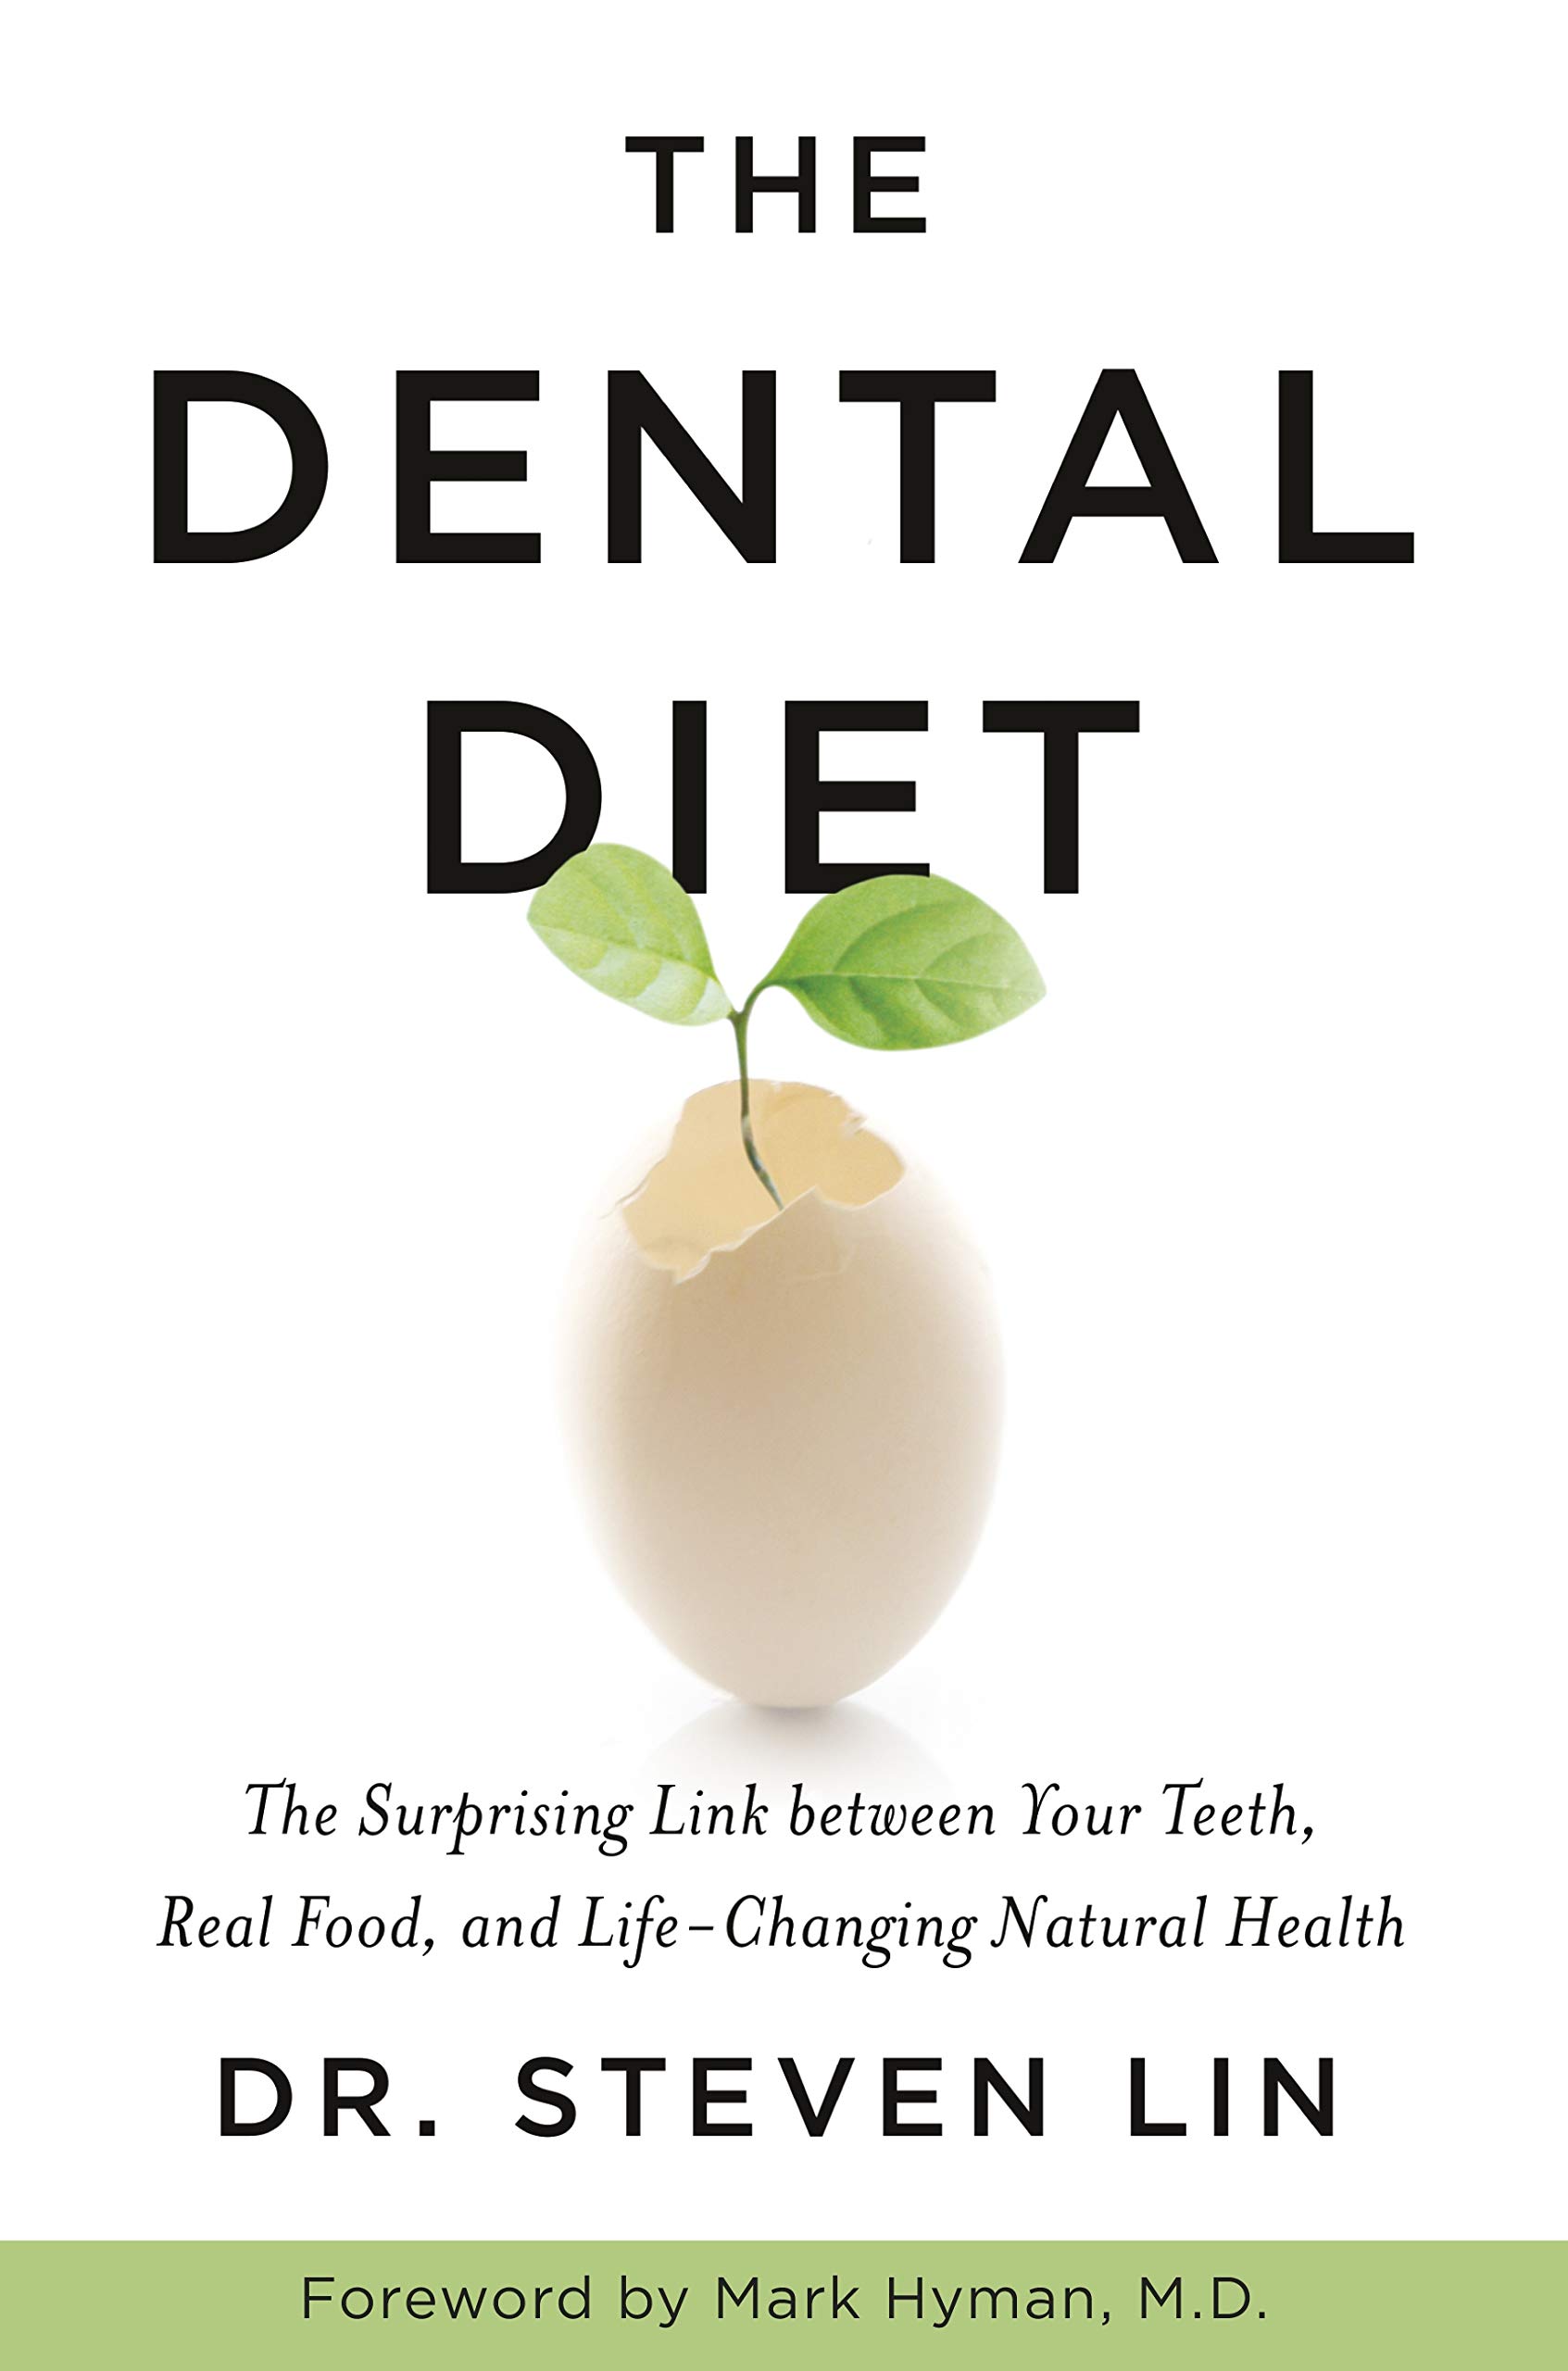 Steven Lin's "The Dental Diet" Book